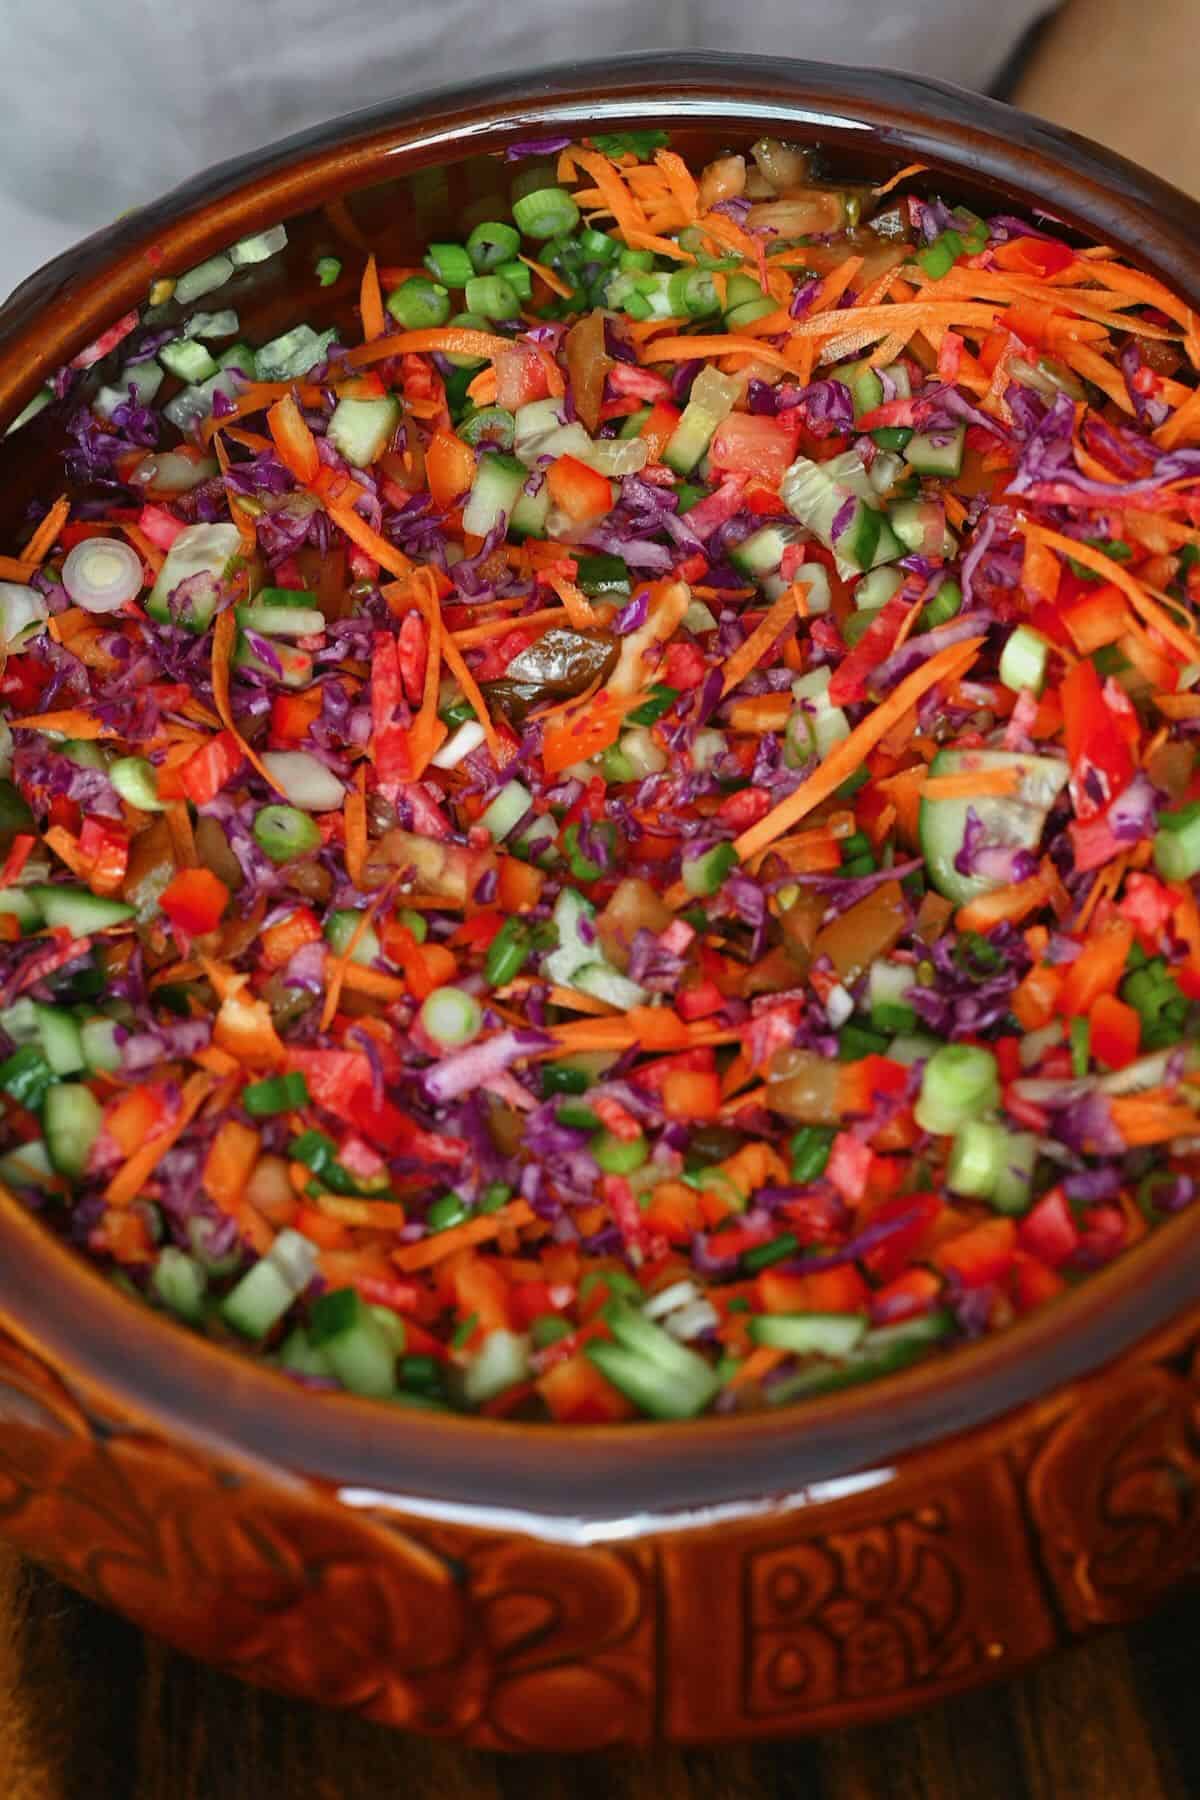 Mixed rainbow cabbage salad